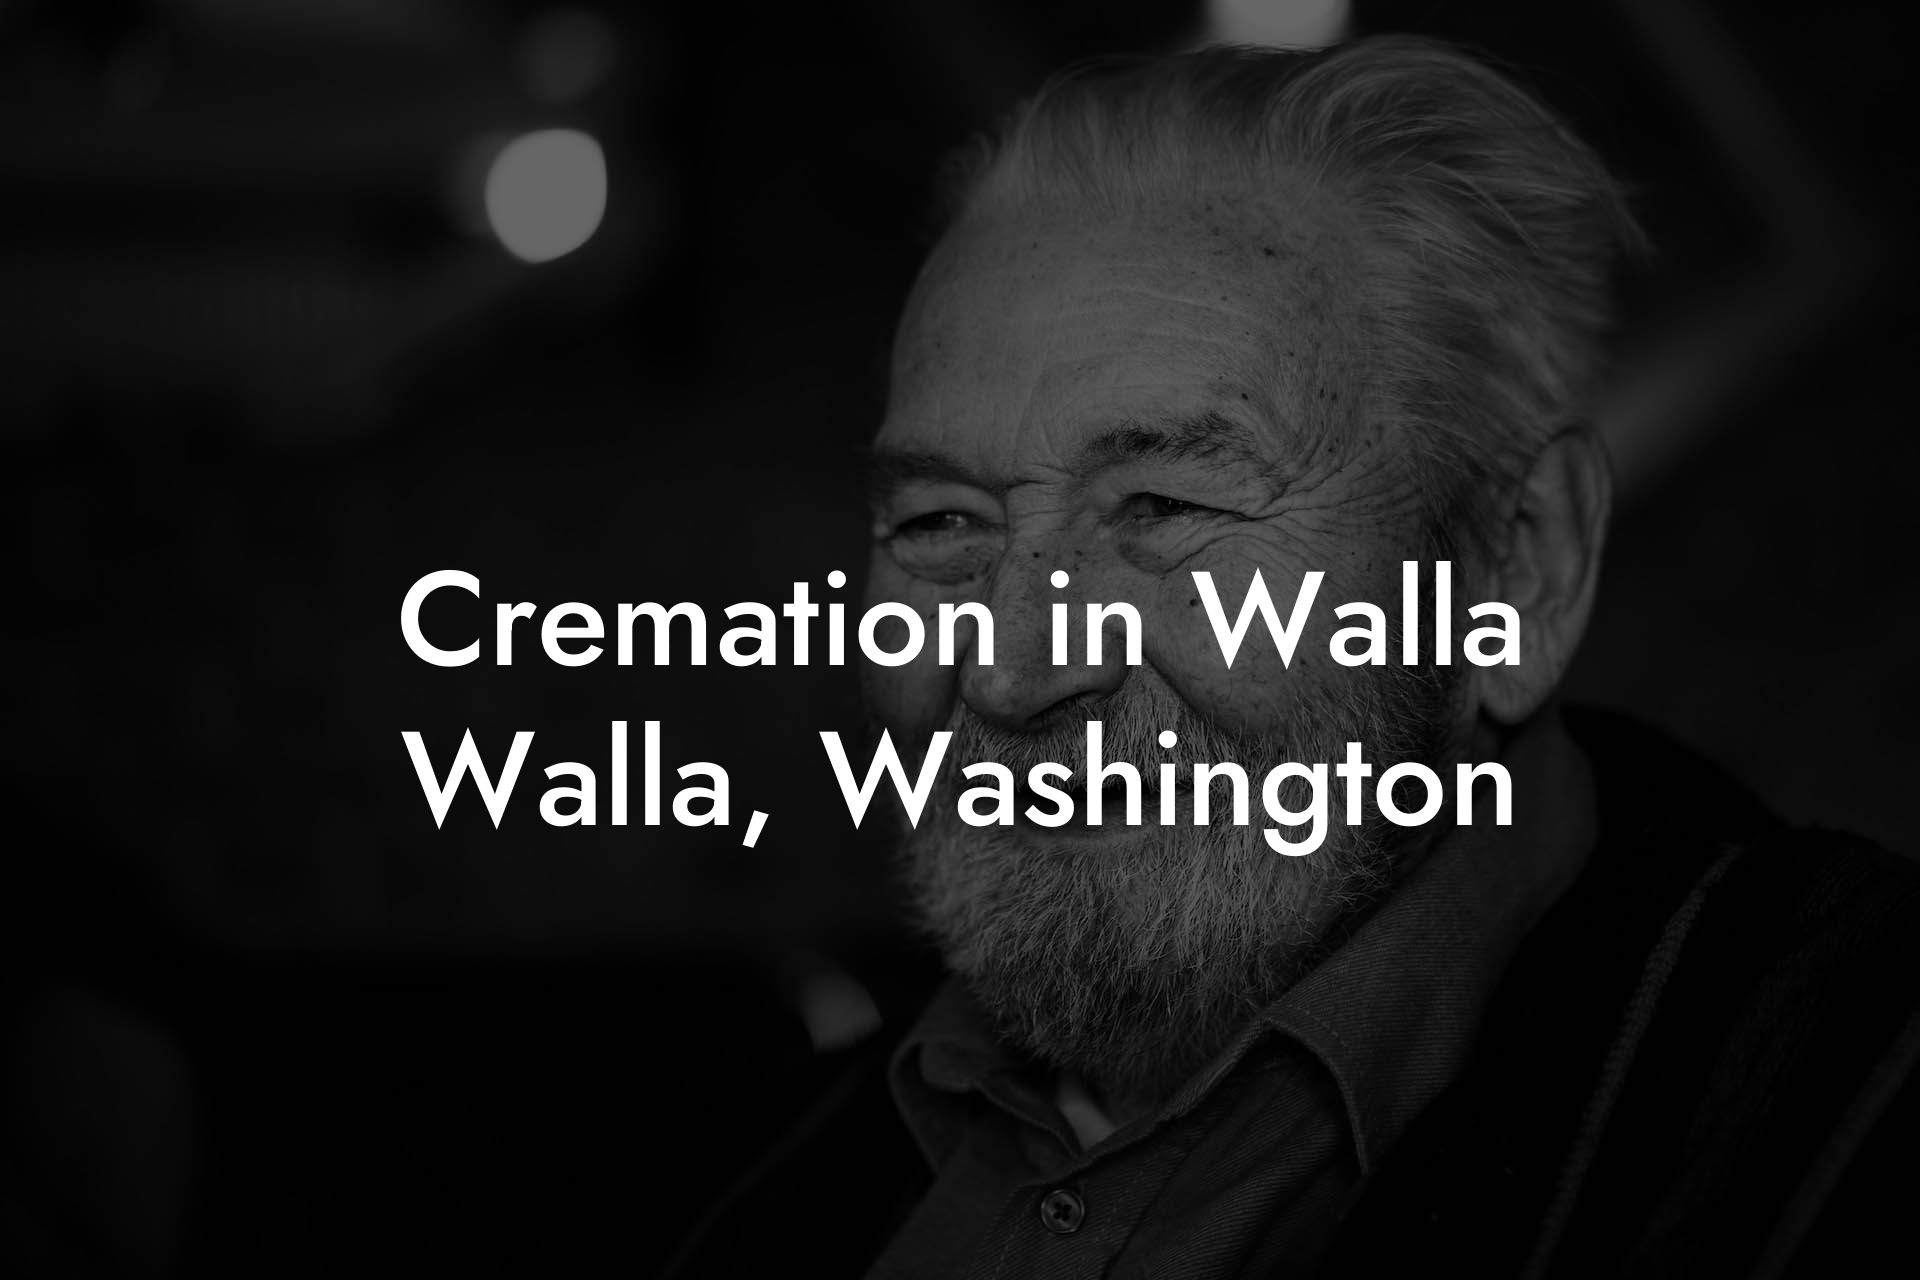 Cremation in Walla Walla, Washington